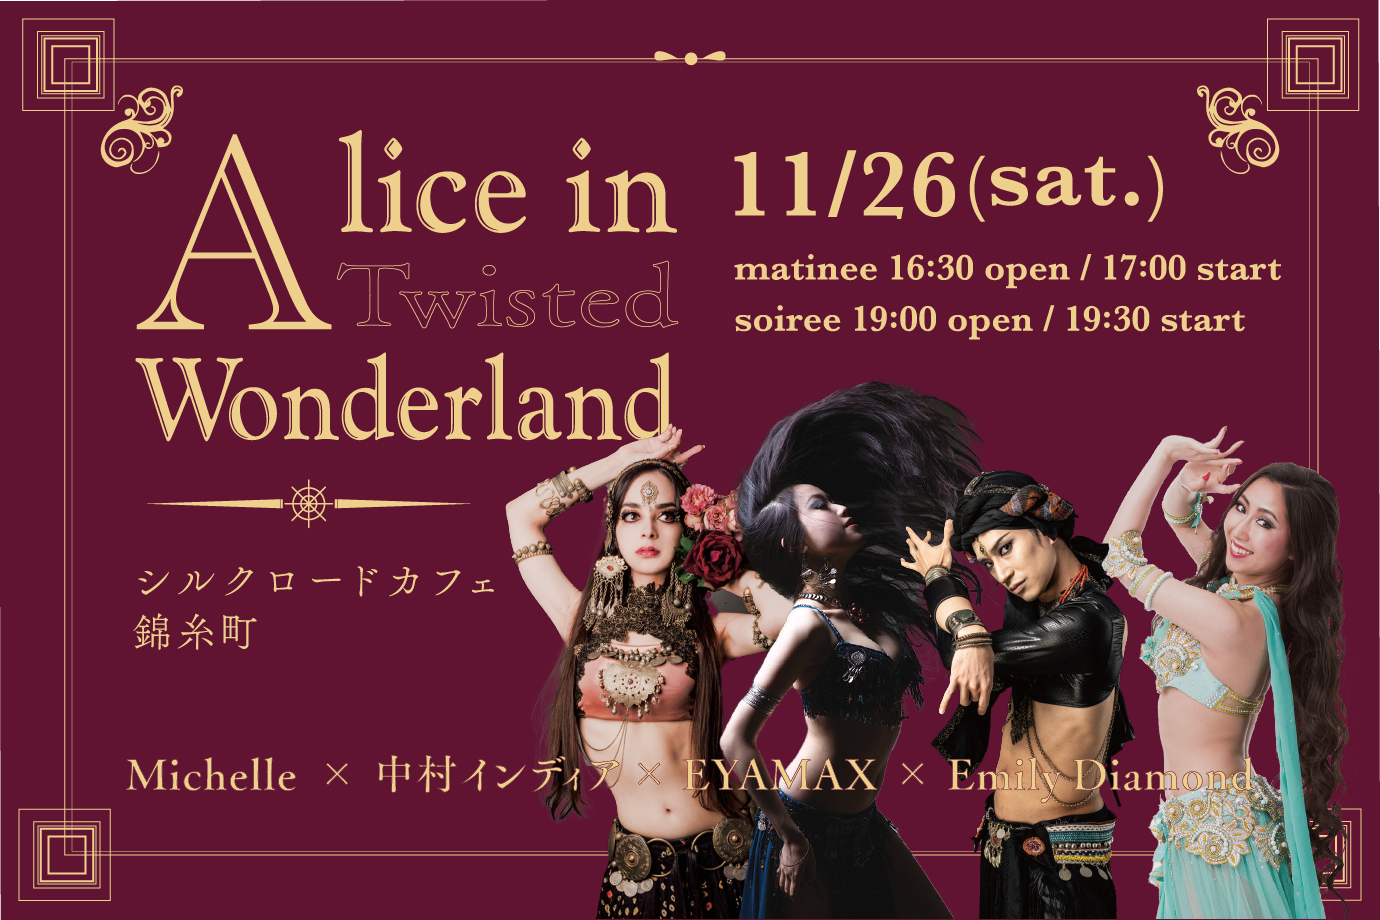 Alice in Twisted Wonderland